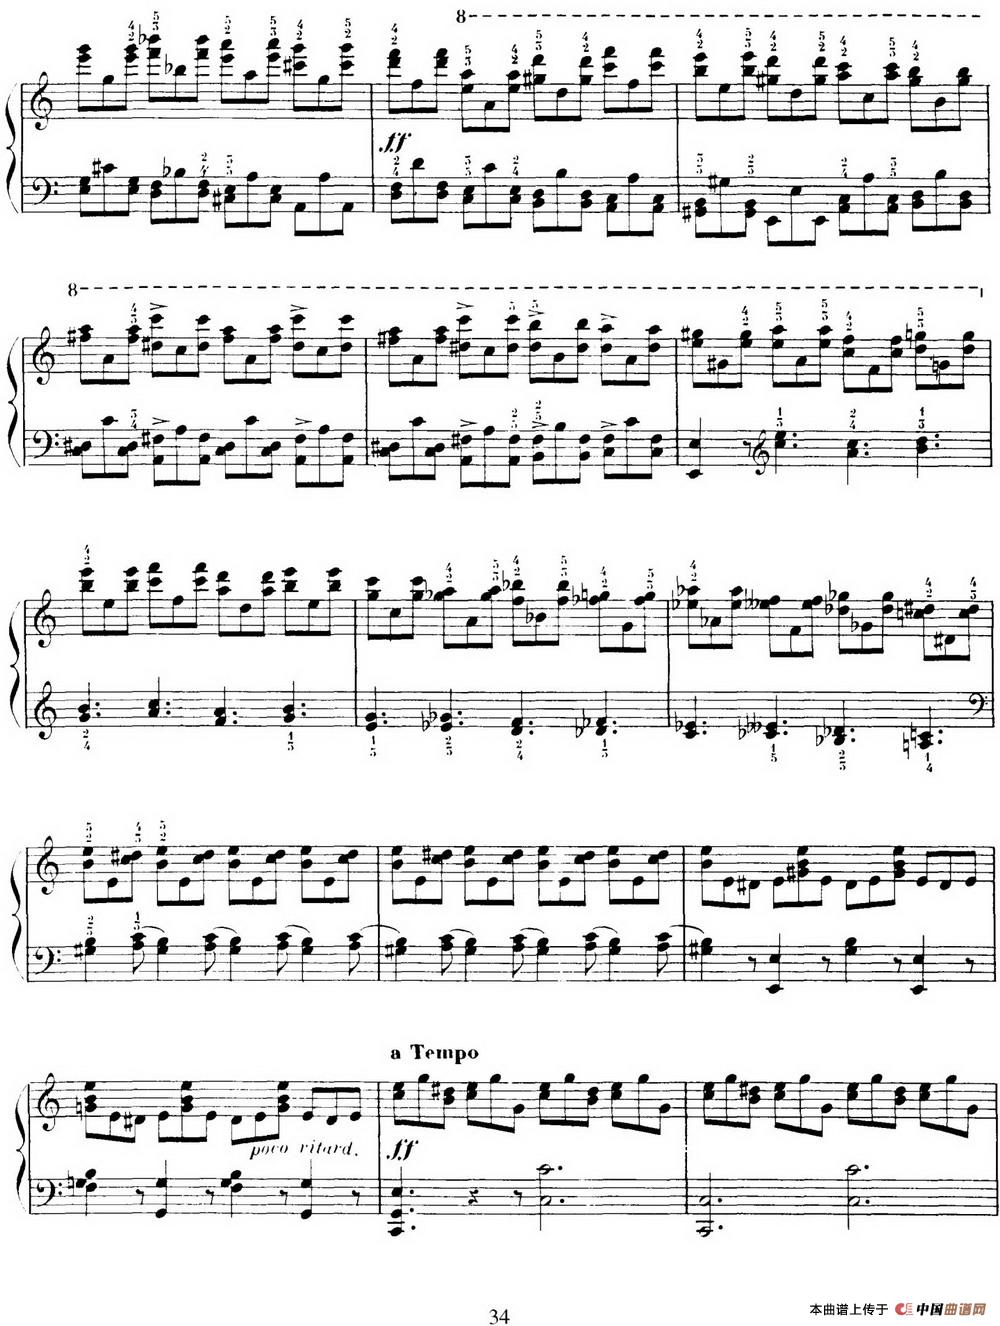 15 Etudes de Virtuosité Op.72 No.8（十五首钢琴练习曲之八）(1)_034.jpg